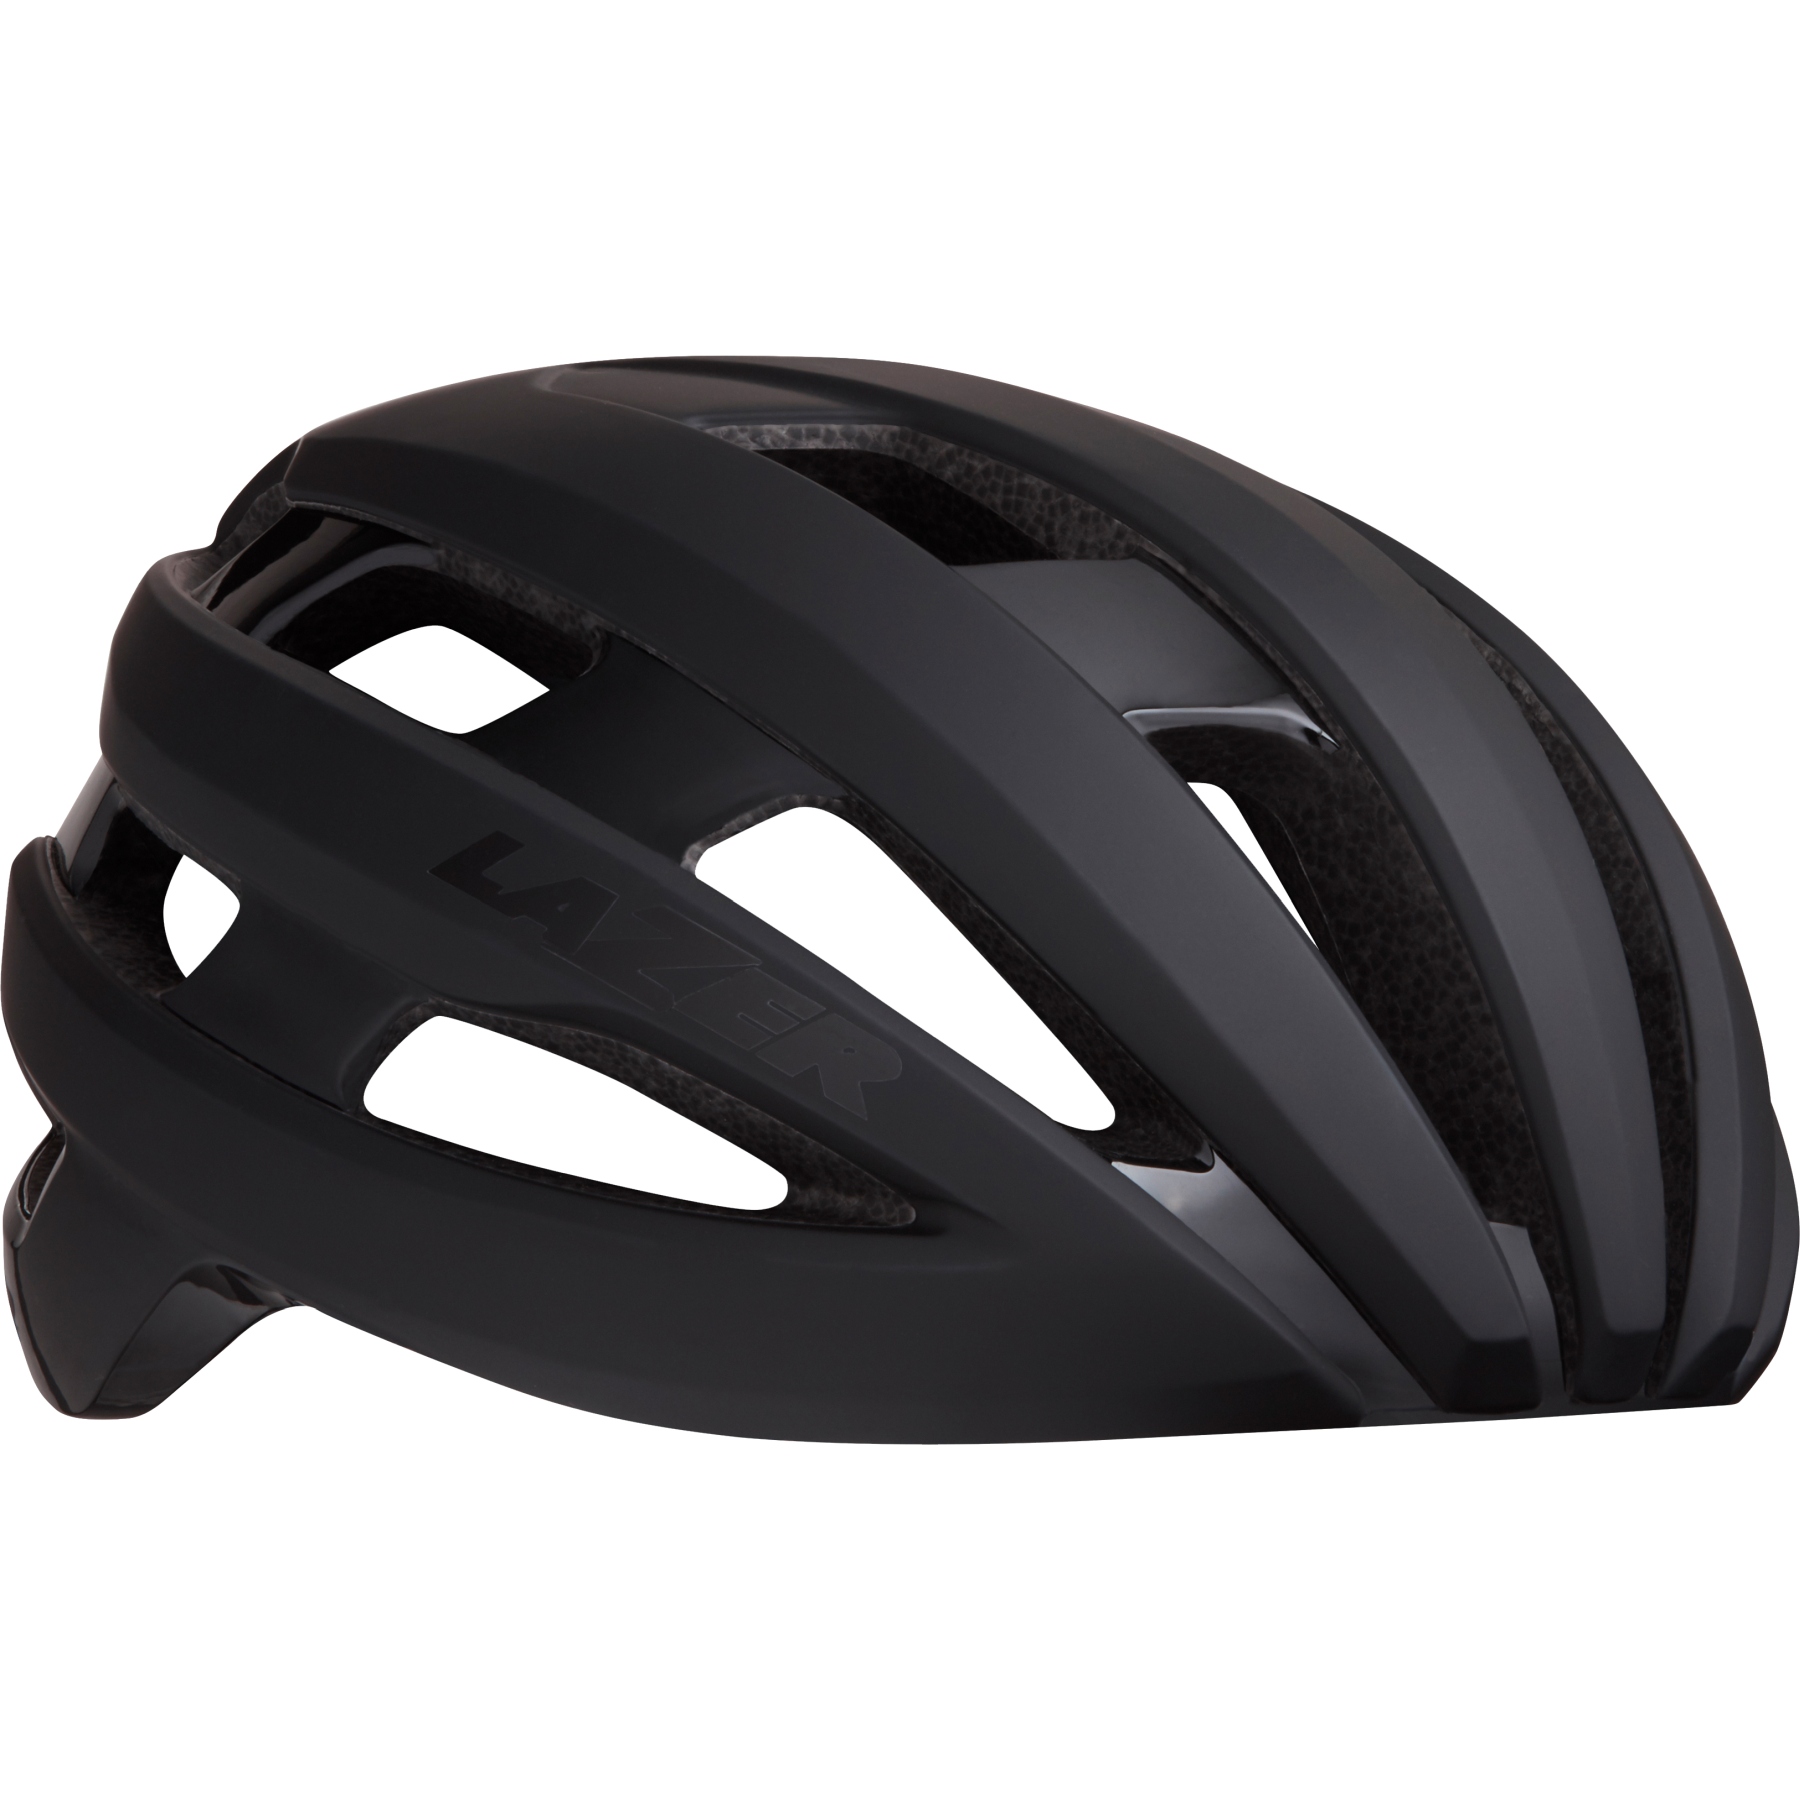 Picture of Lazer Sphere Bike Helmet - matte black